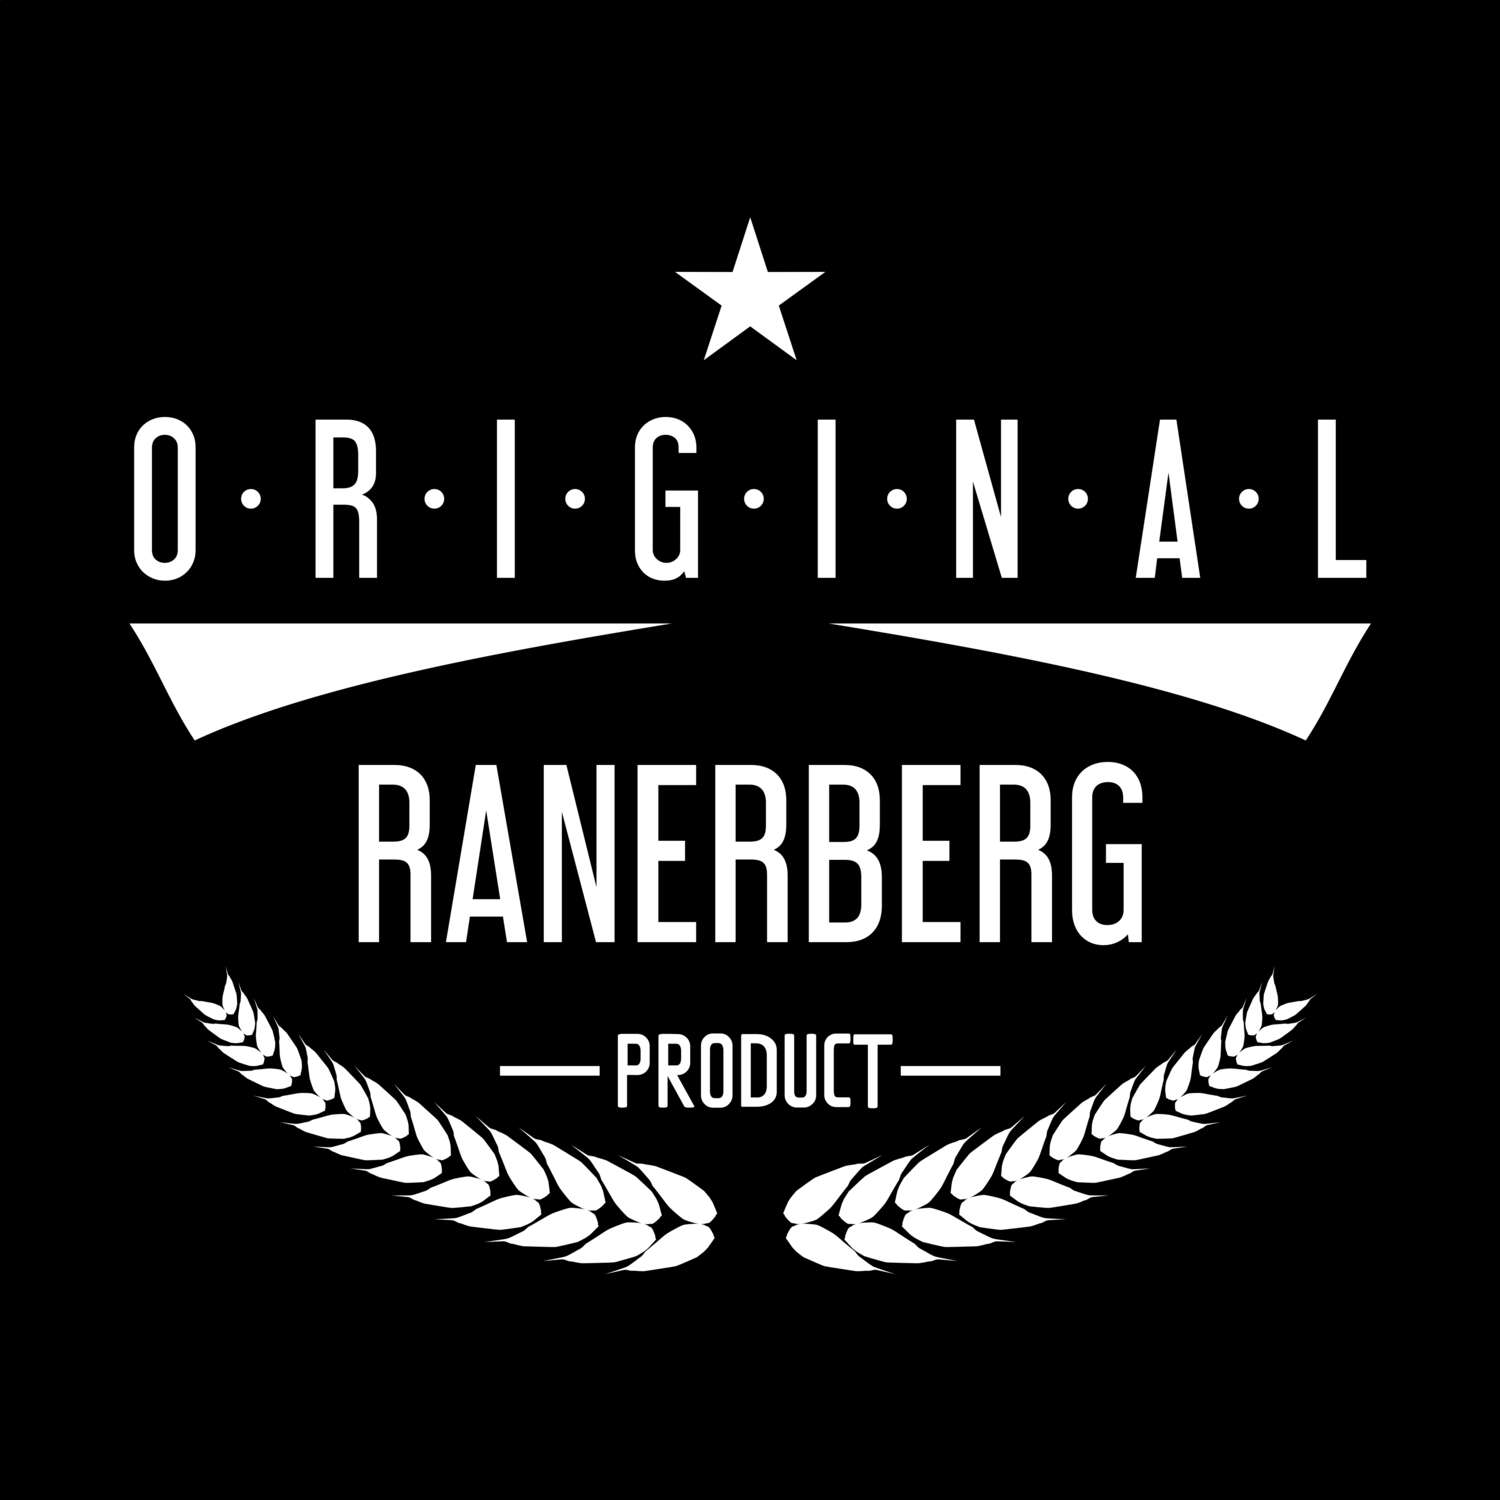 Ranerberg T-Shirt »Original Product«